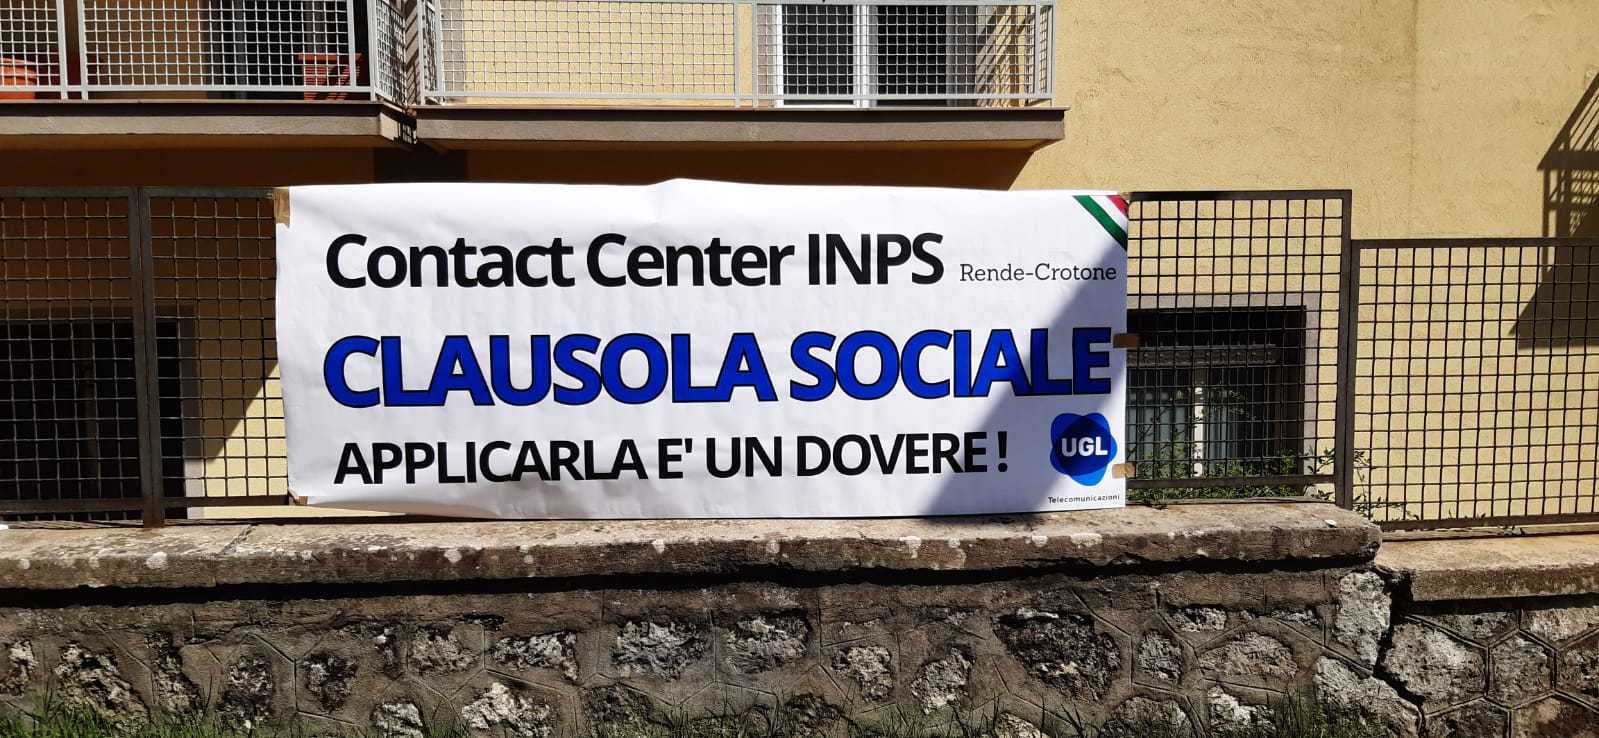 Flash Mob sede INPS Catanzaro applicazione clausola sociale contact center